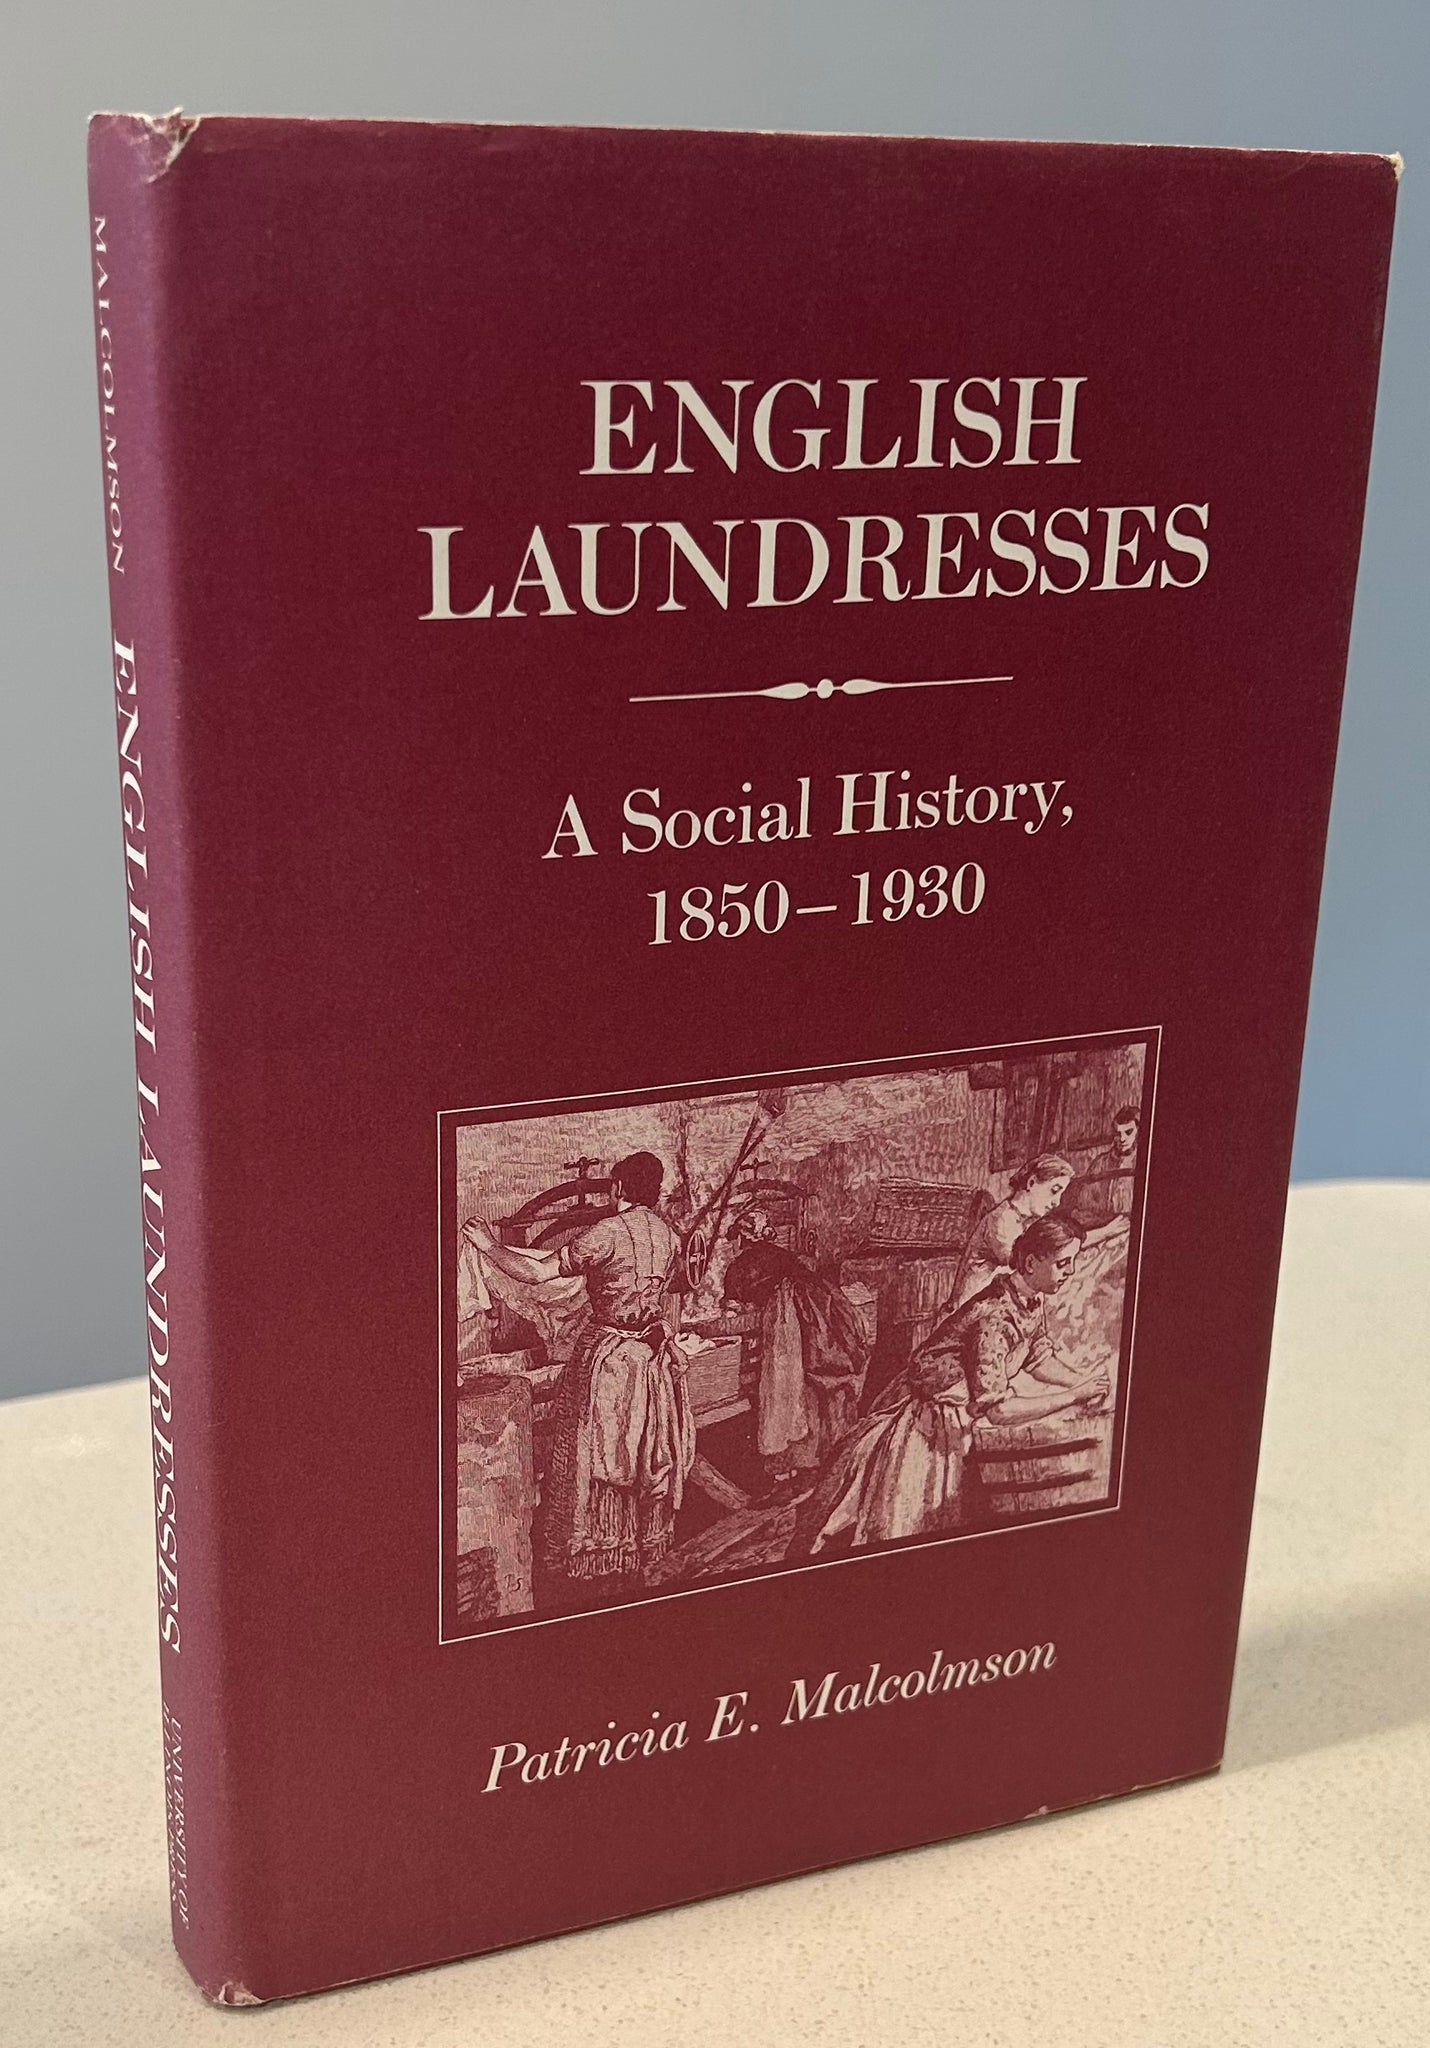 English Laundresses  A Social History  1850-1930